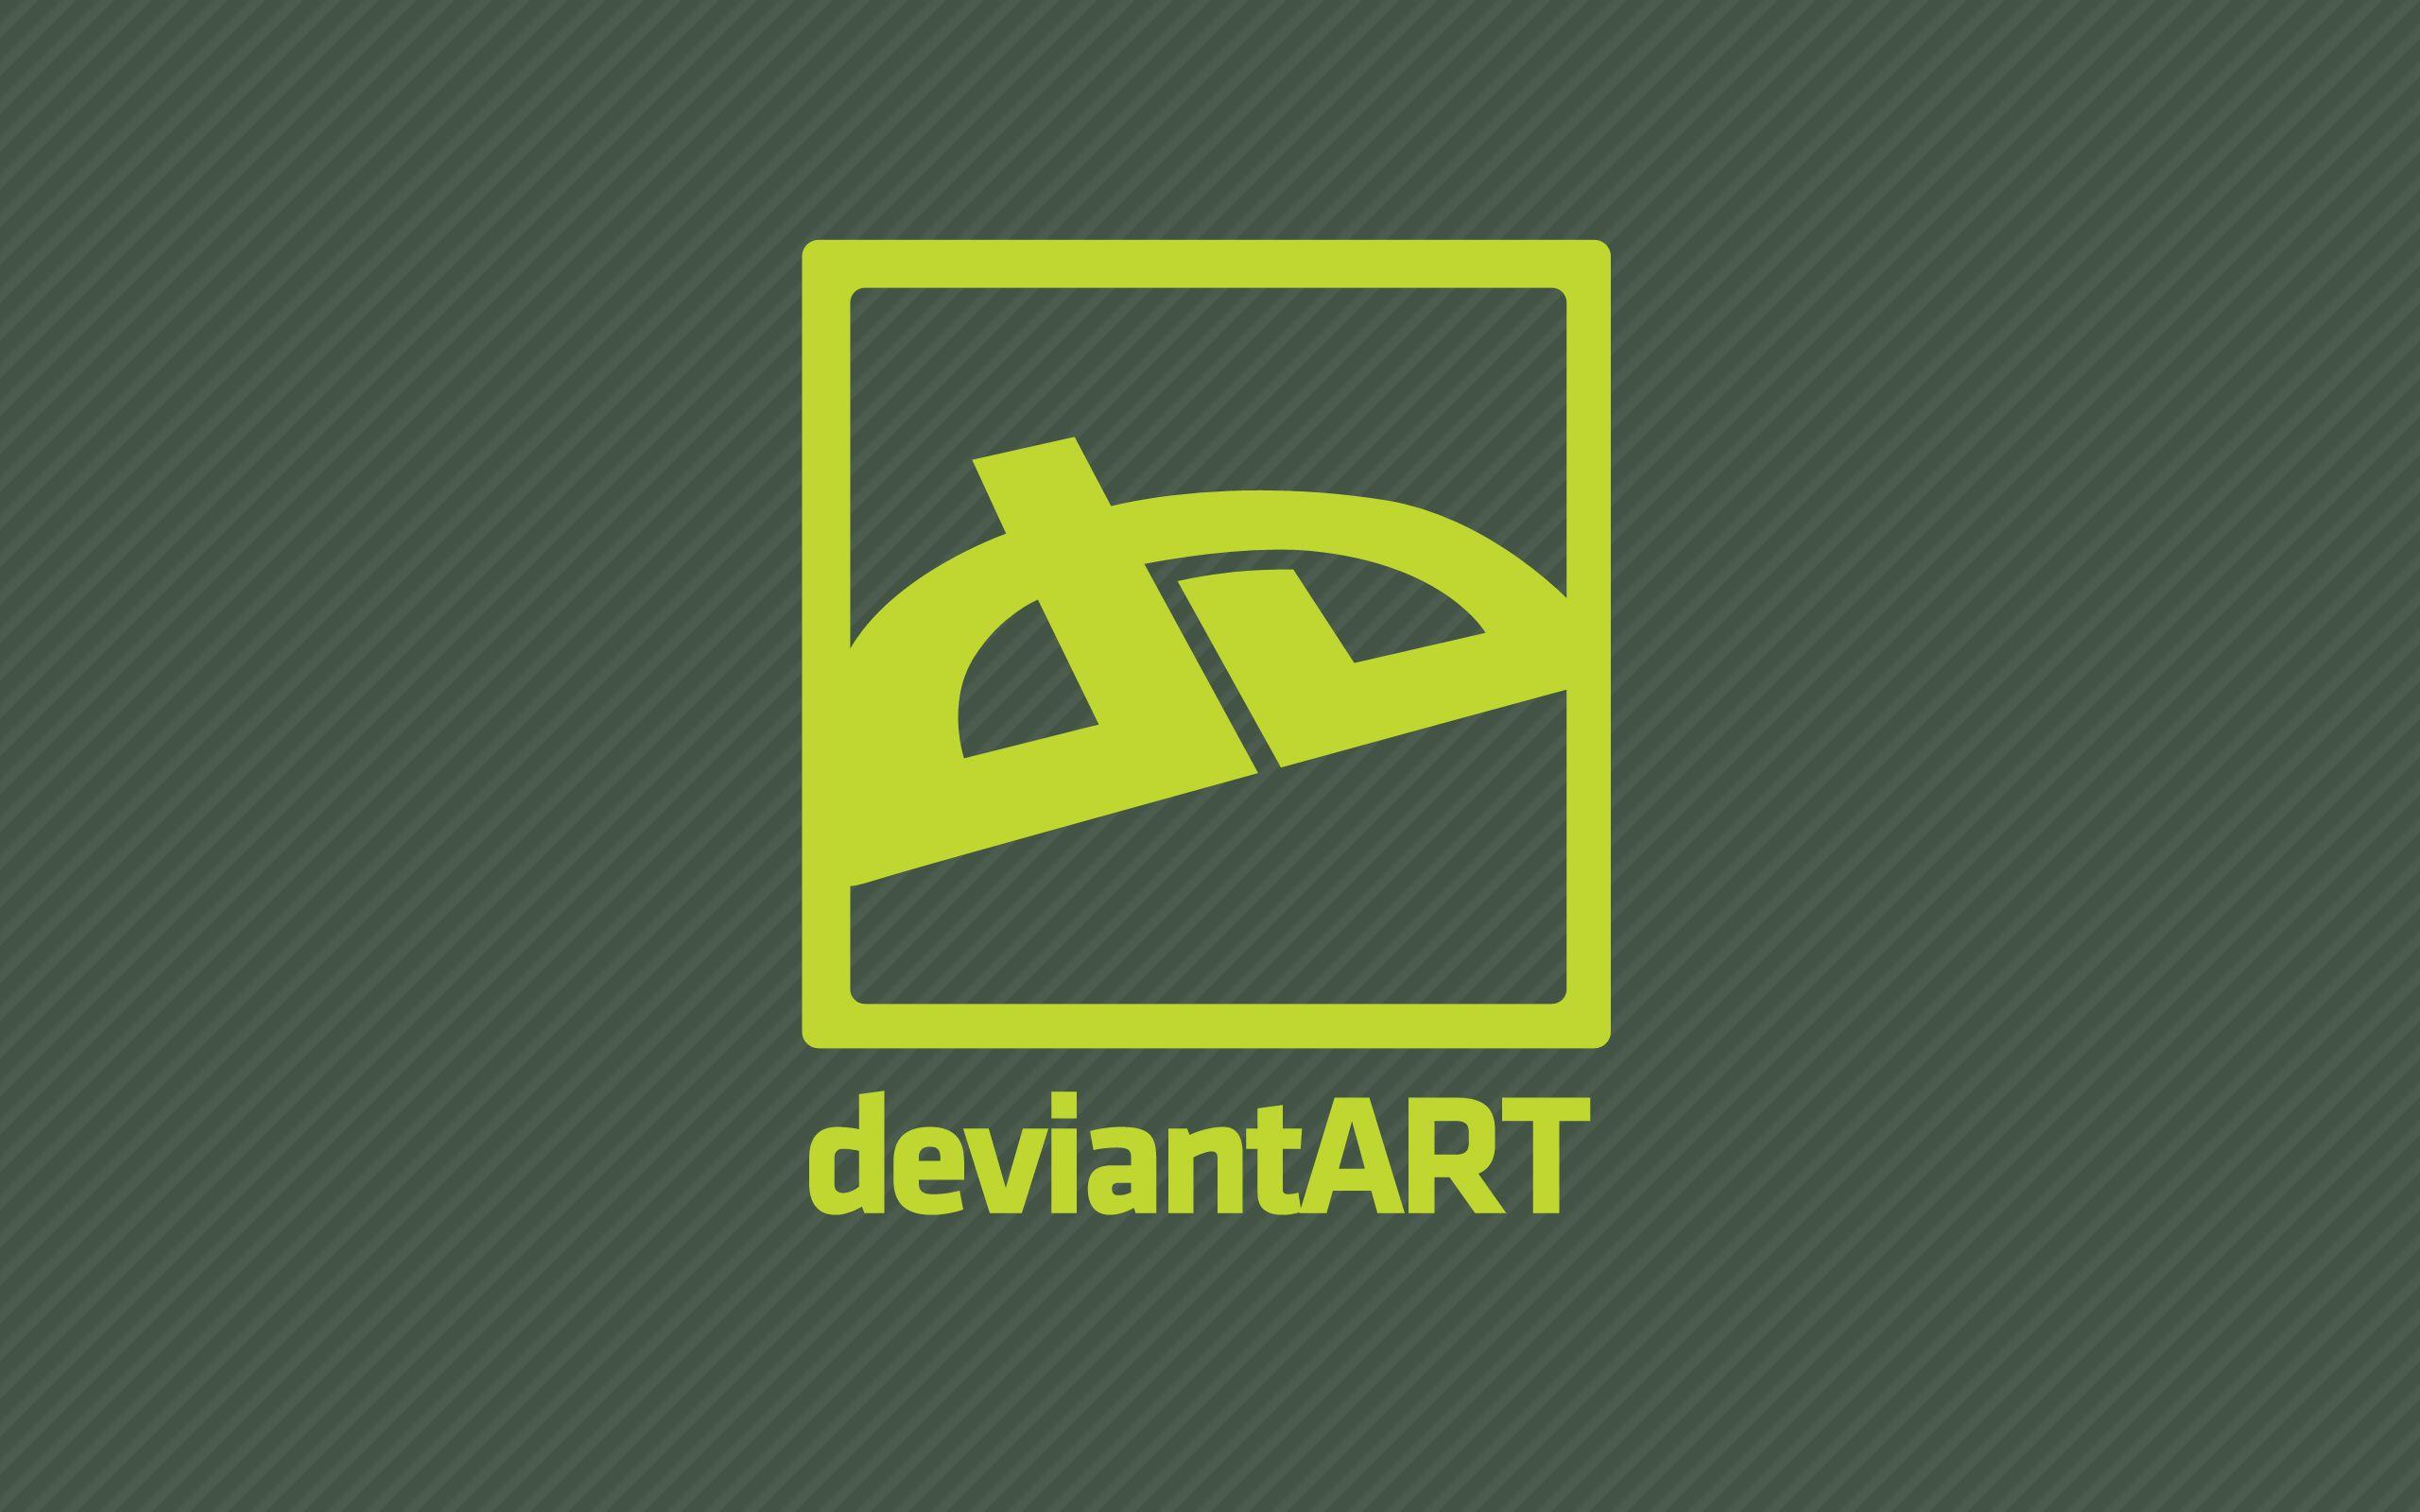 deviantART Logo - New style dA logo wallpaper by KillboxGraphics on DeviantArt